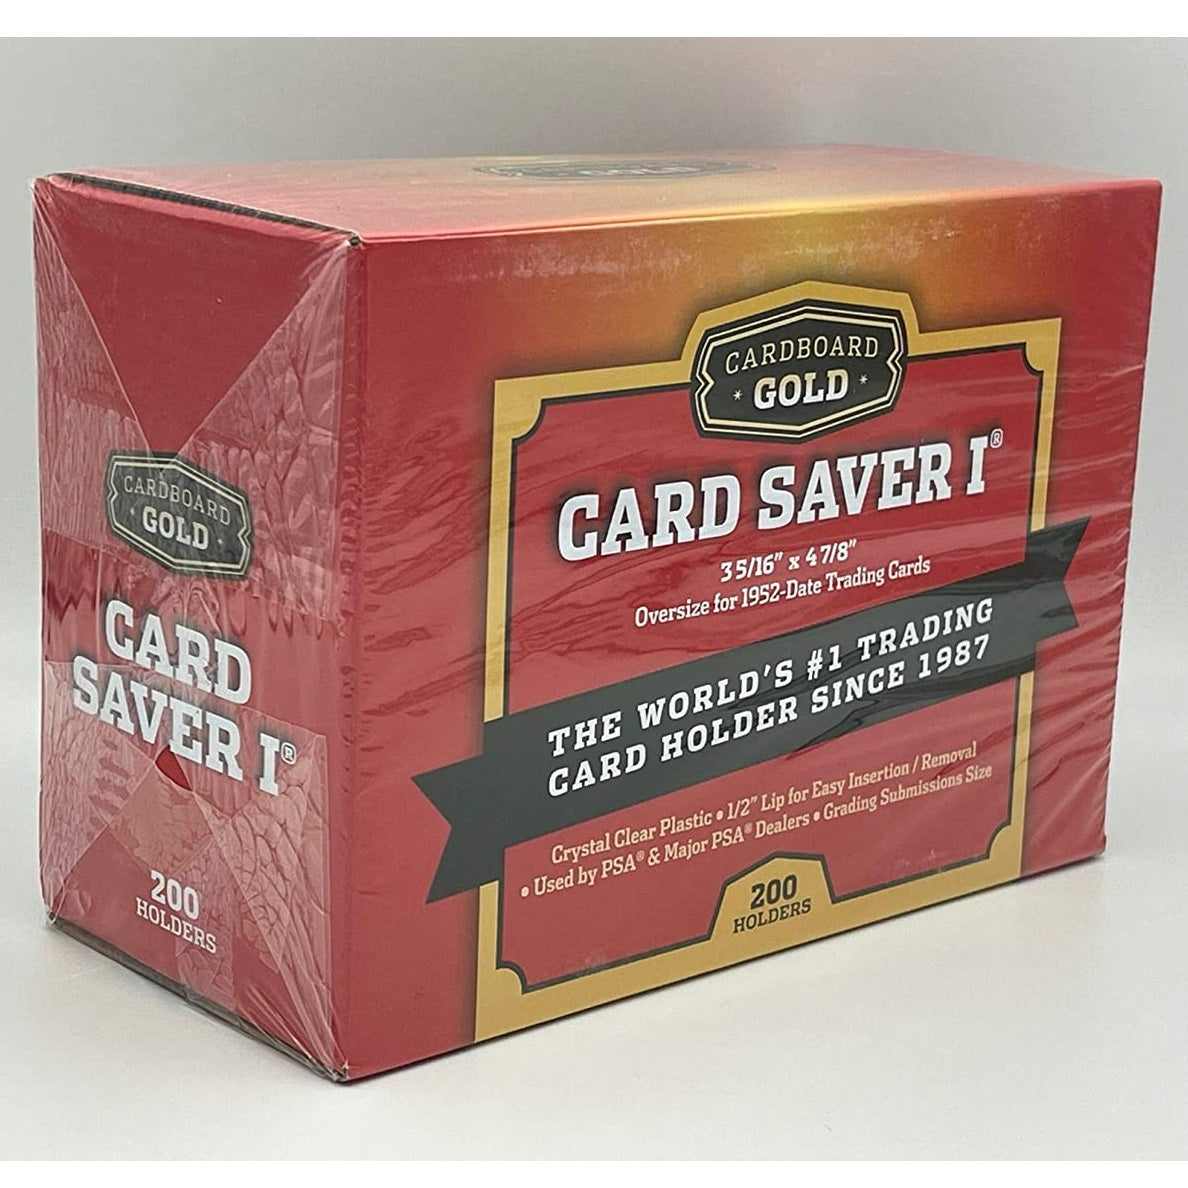 Cardboard Gold "Card Saver 1" Semi-Rigid Card Holder (3 5/16" x 4 7/8")